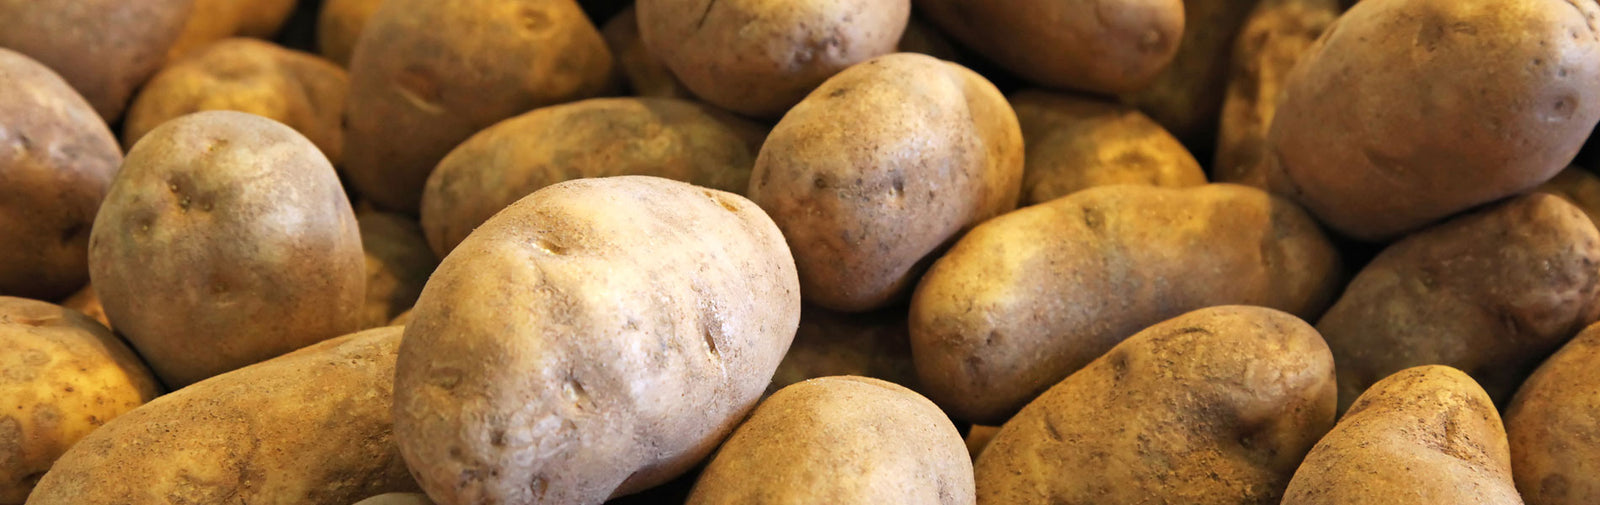 russet potatoes yield case study